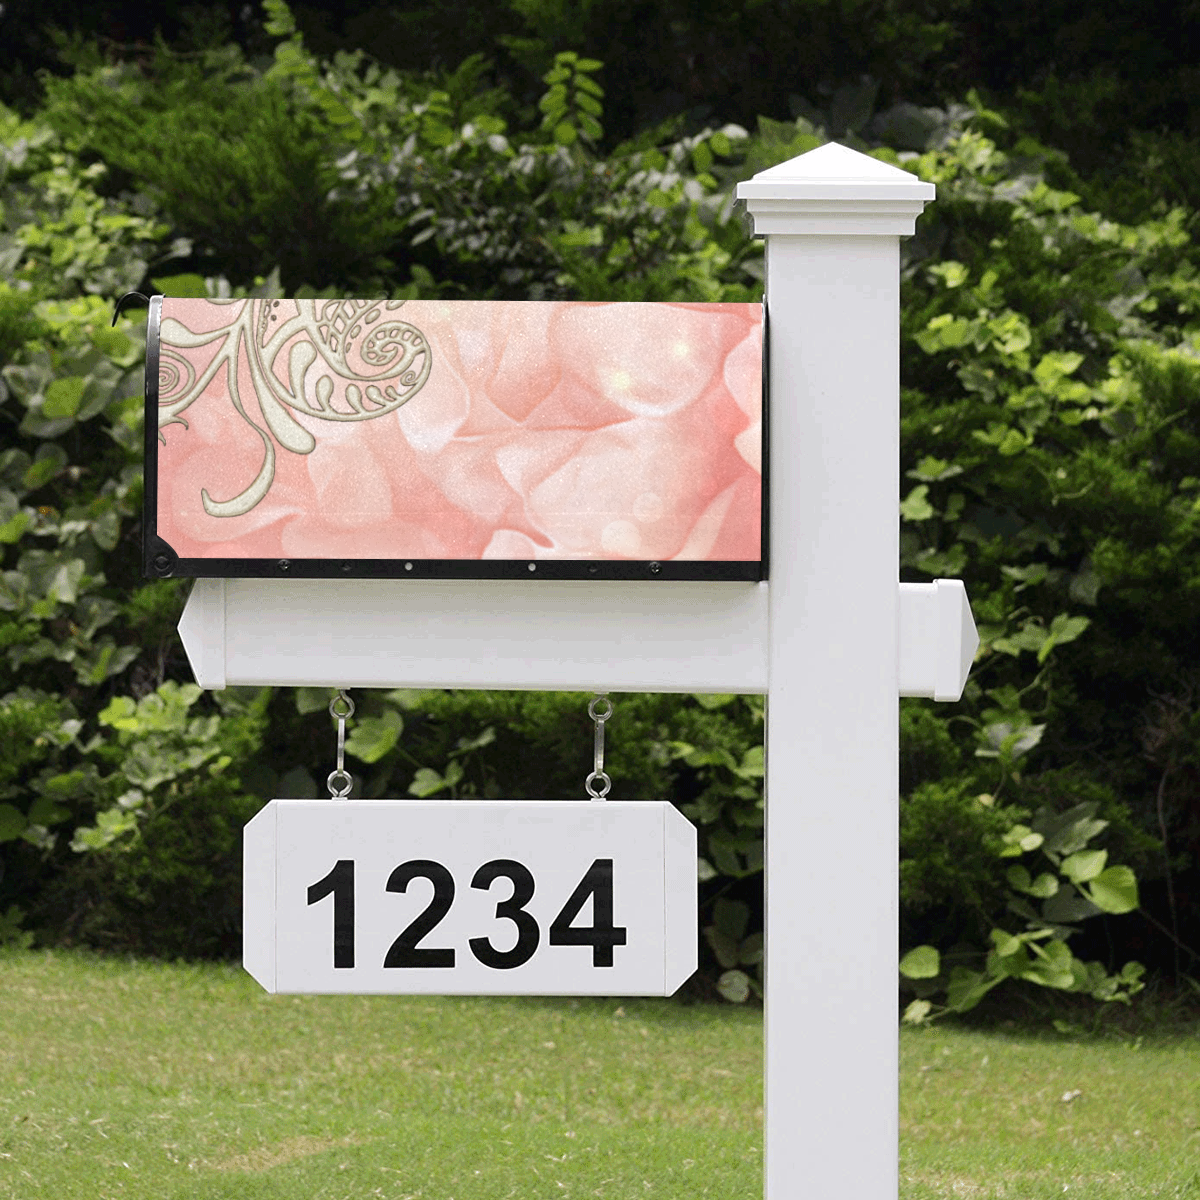 Wonderful flowers Mailbox Cover